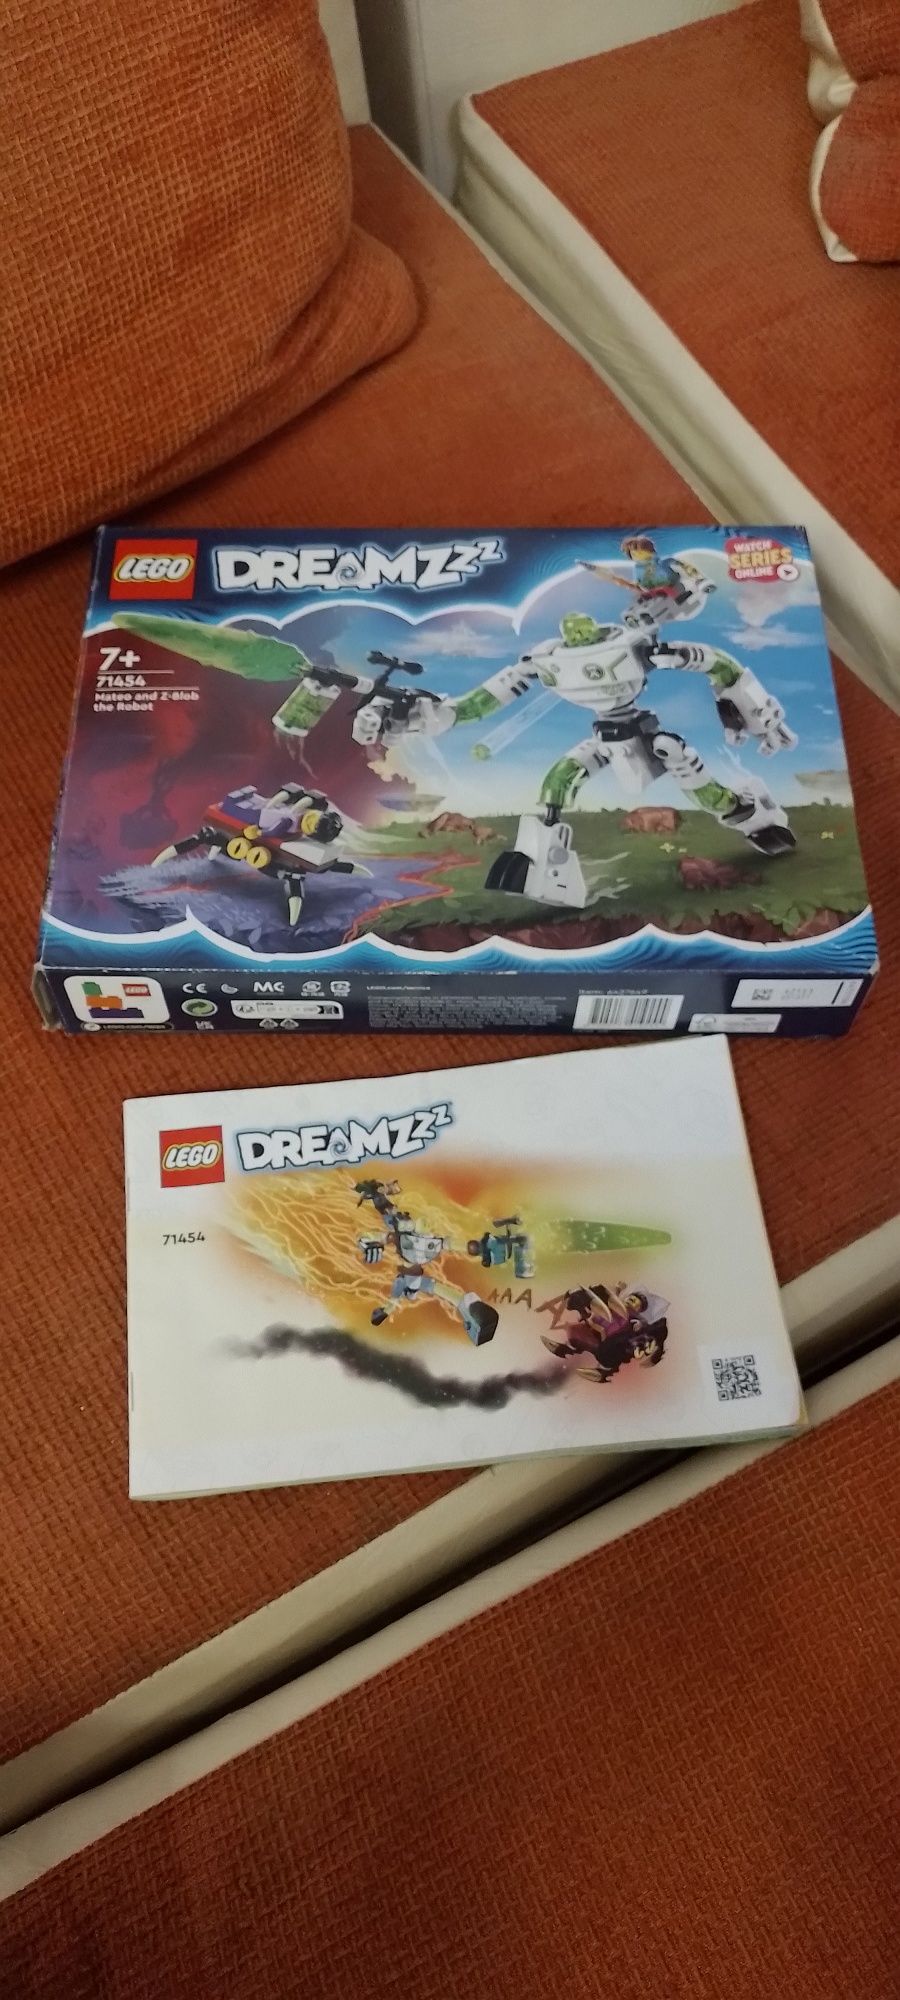 De vânzare 3 Lego complete, 2 ninjago și unuldreamz